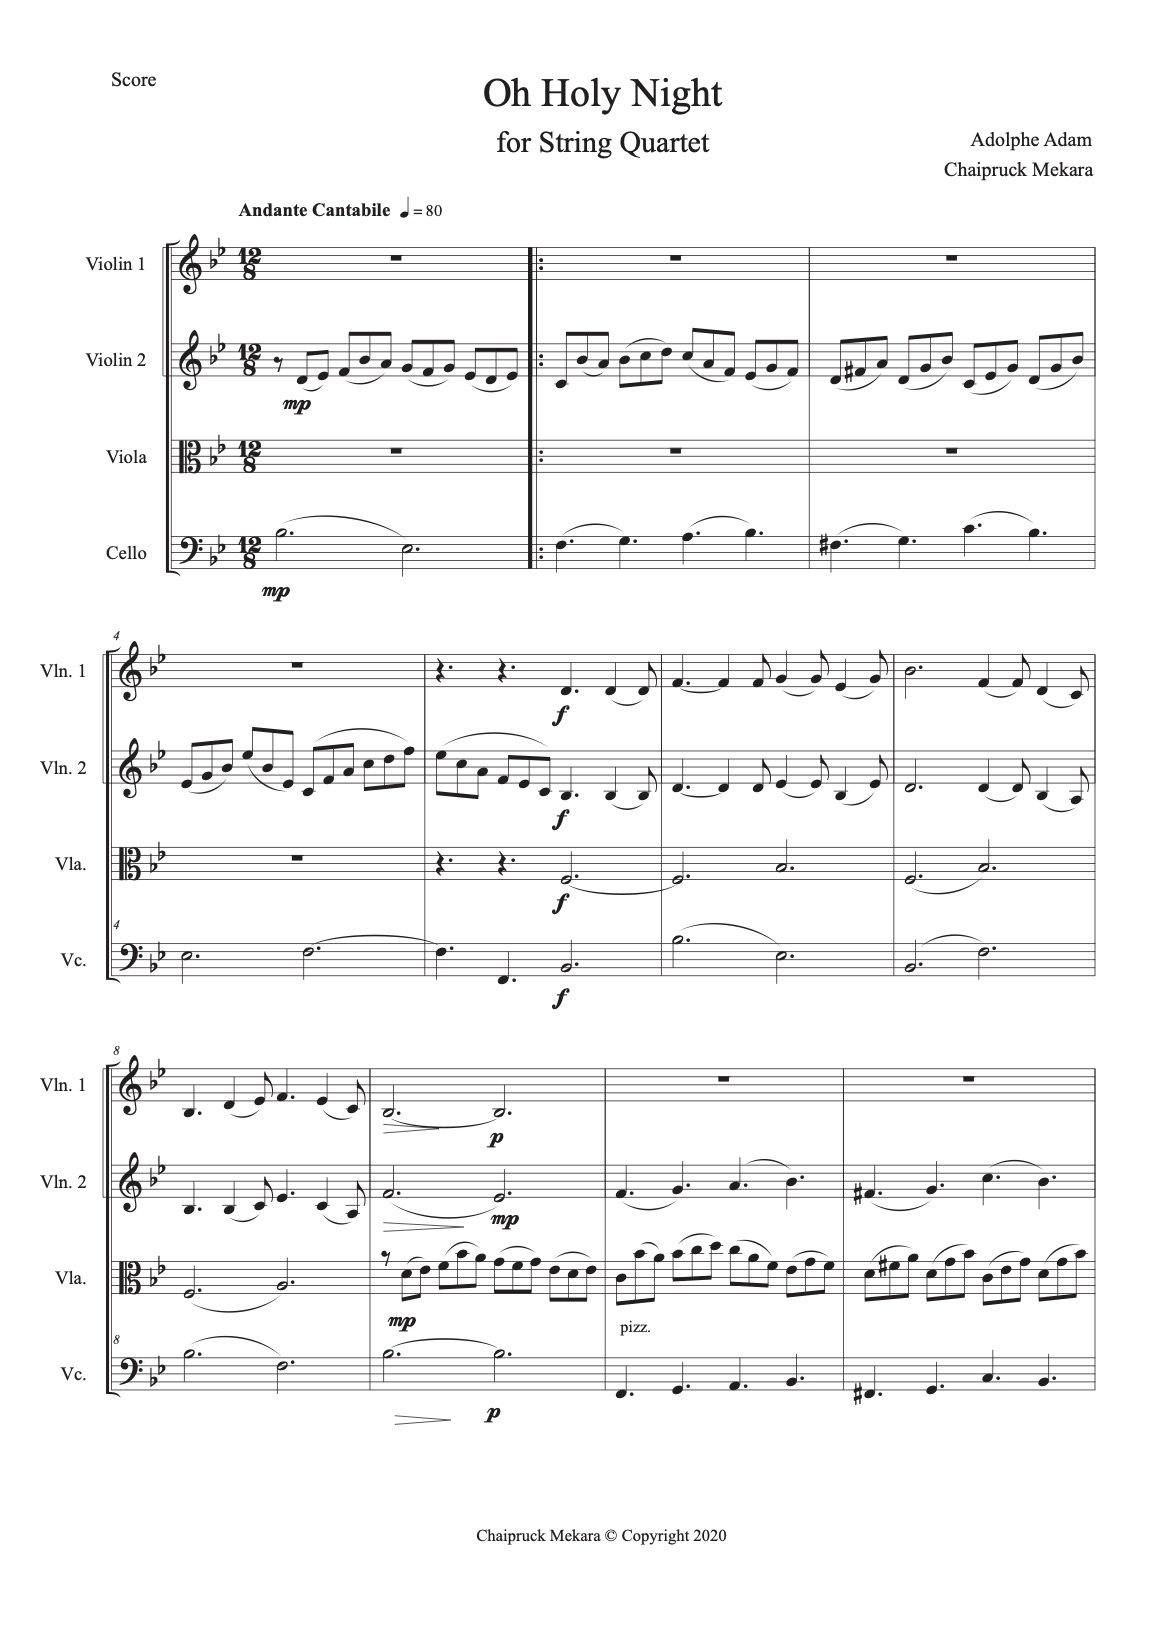 Oh Holy Night for String Quartet - ChaipruckMekara